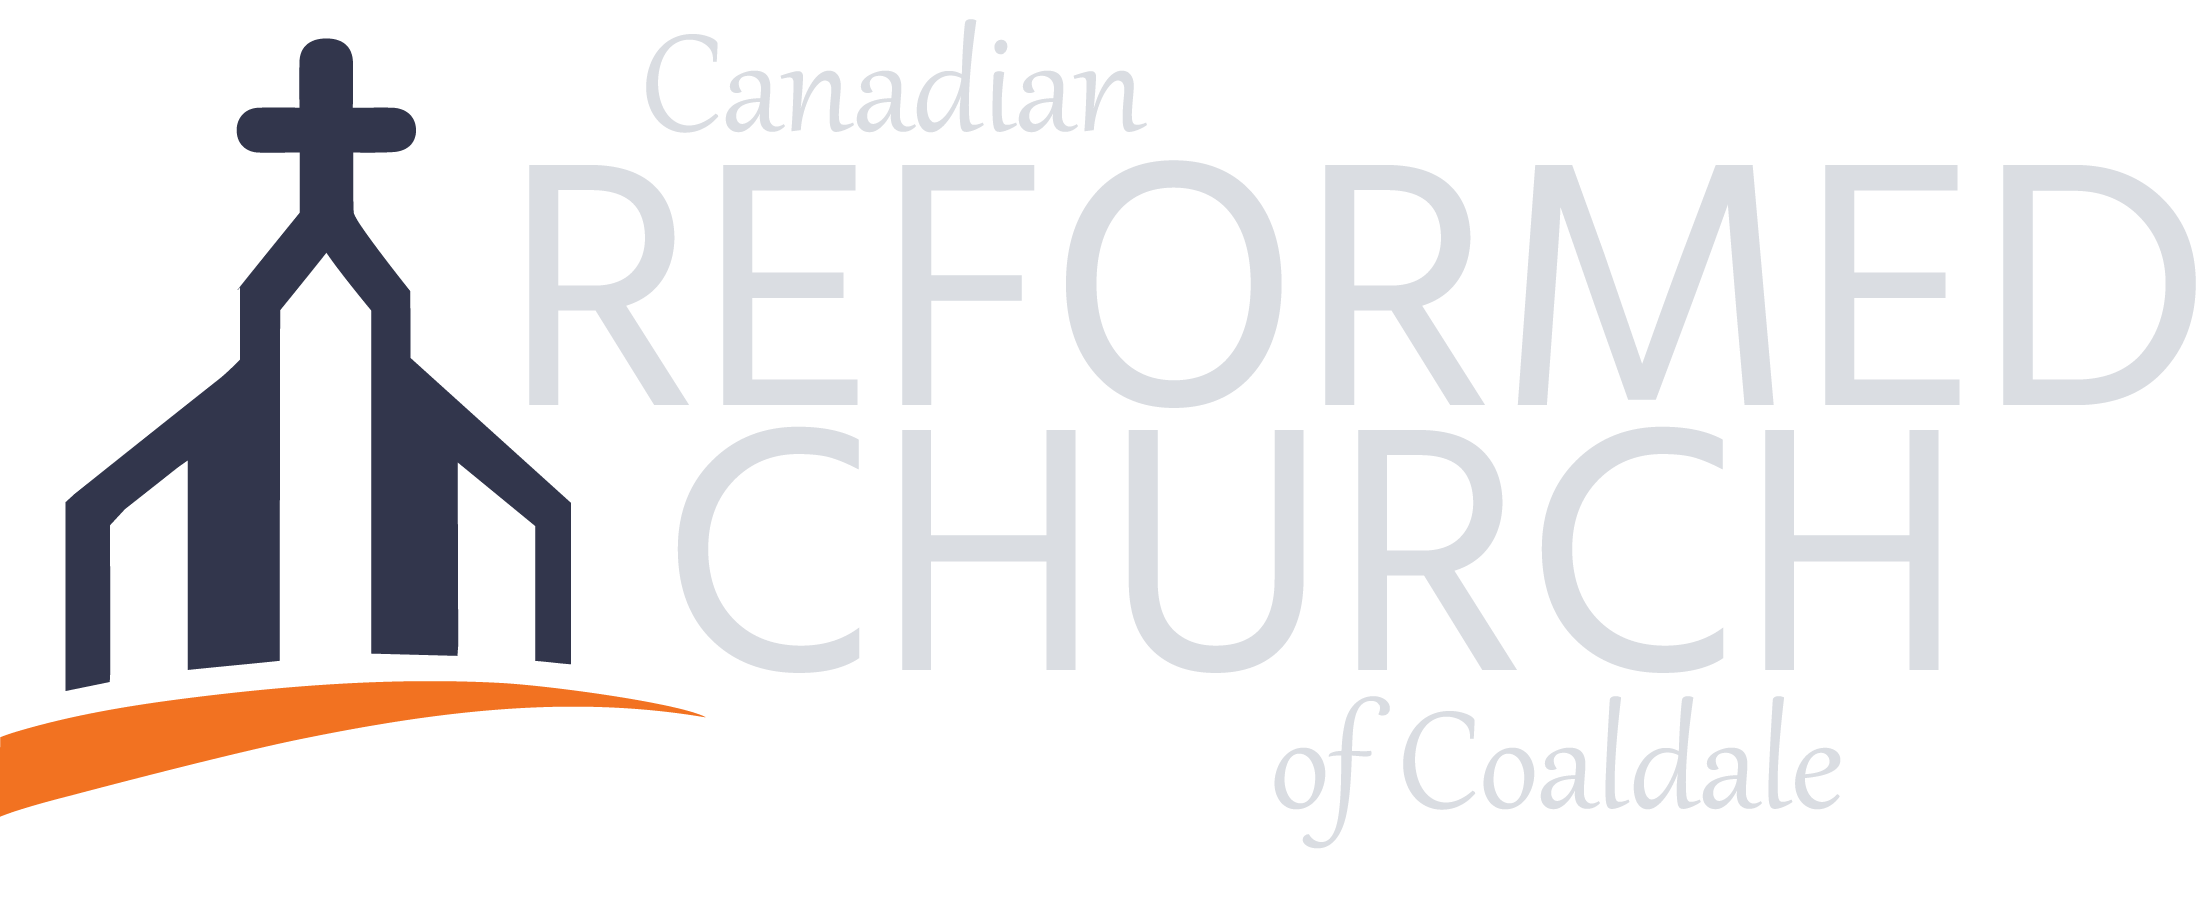 Coaldale Canadian Reformed Church